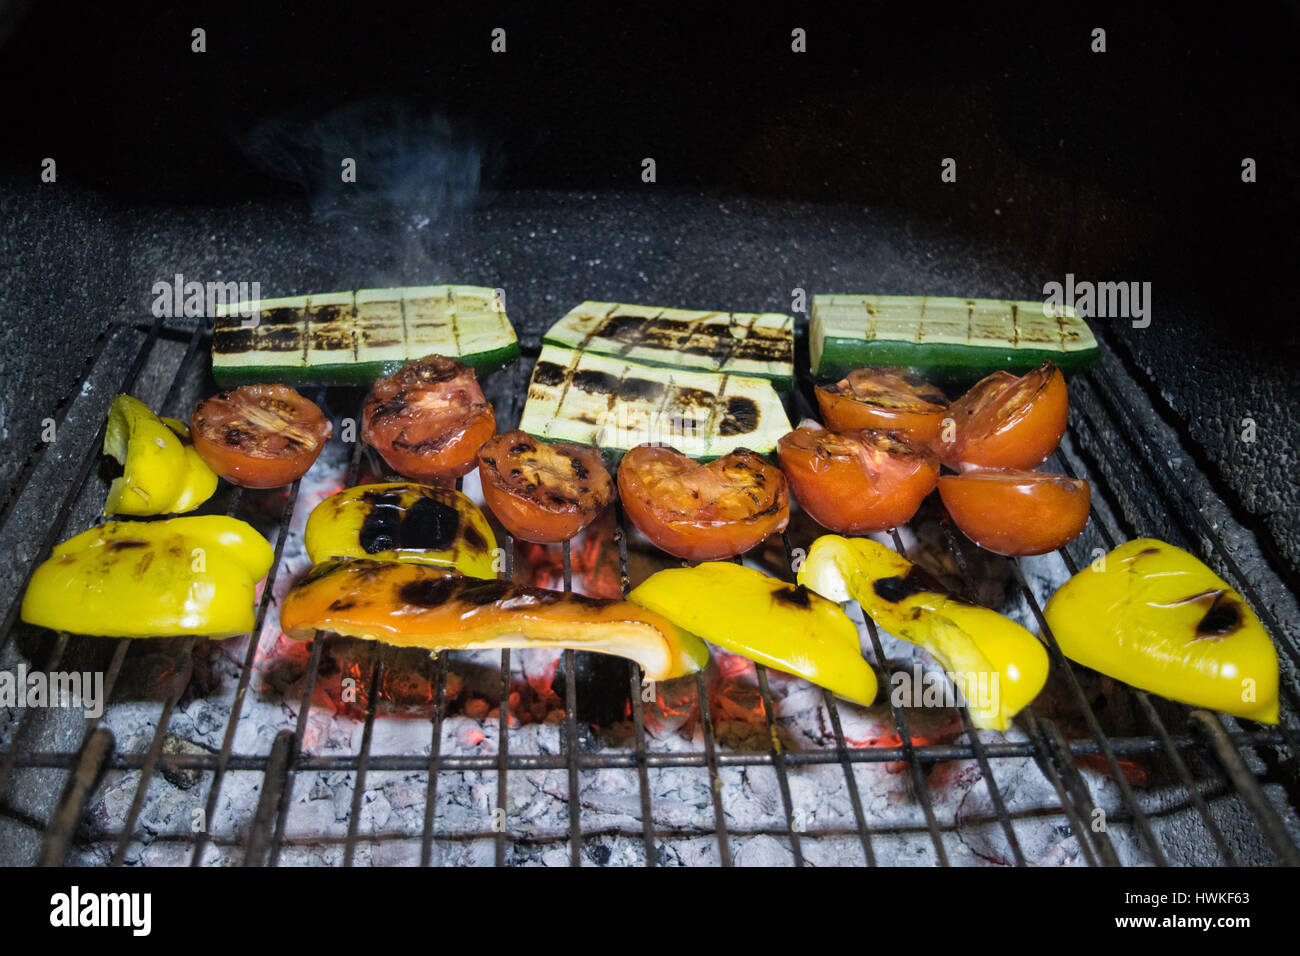 https://c8.alamy.com/comp/HWKF63/vegetables-on-the-grill-HWKF63.jpg